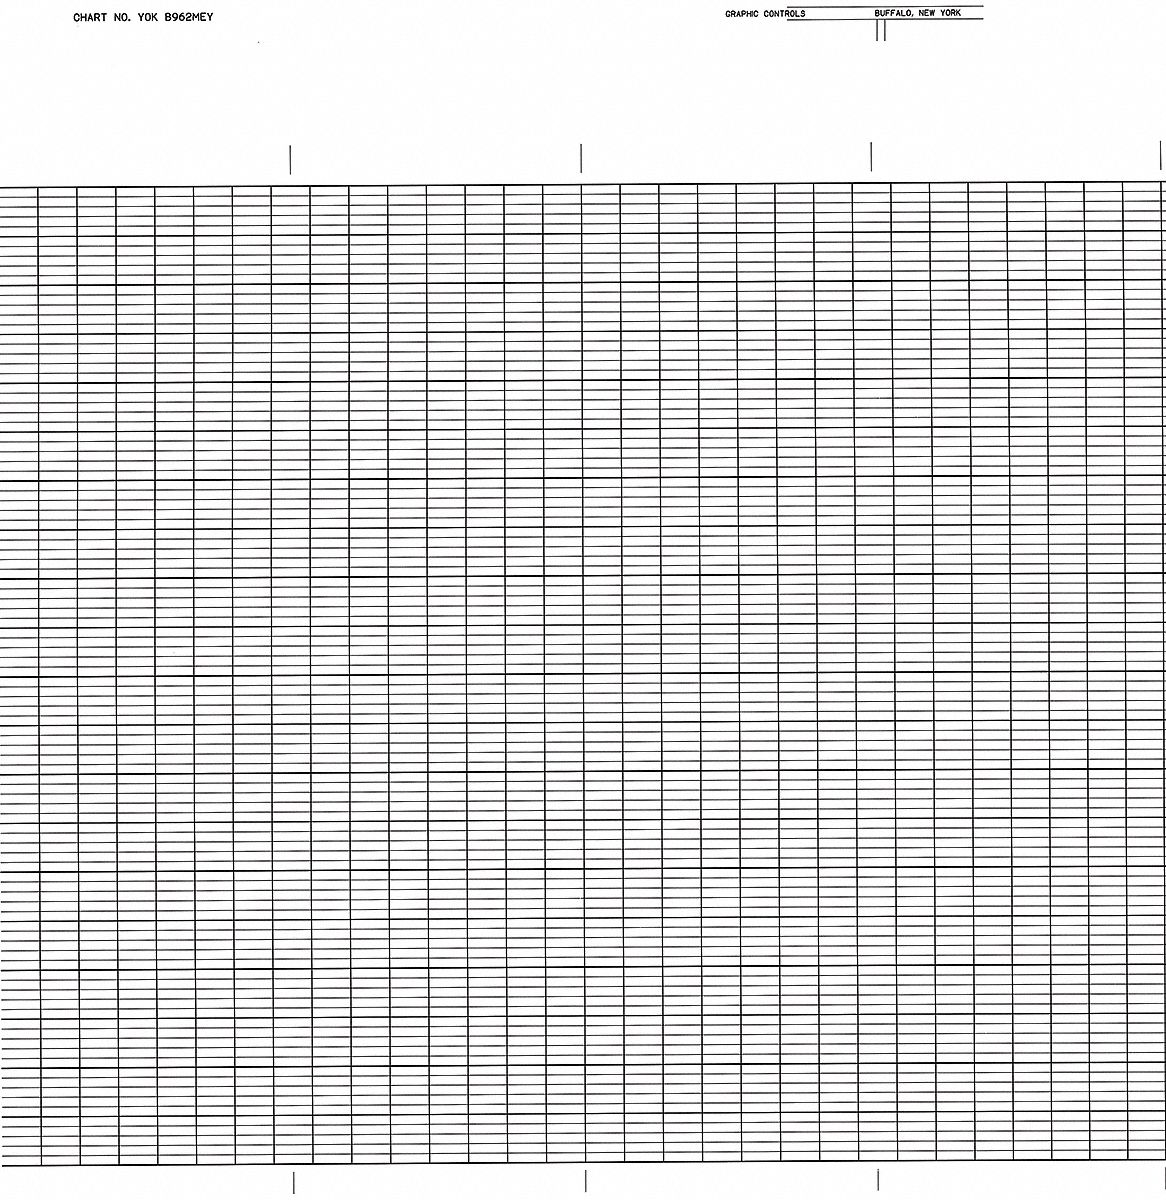 5MEZ0 - Chart Fanfold Range 0 to 100 99 Ft